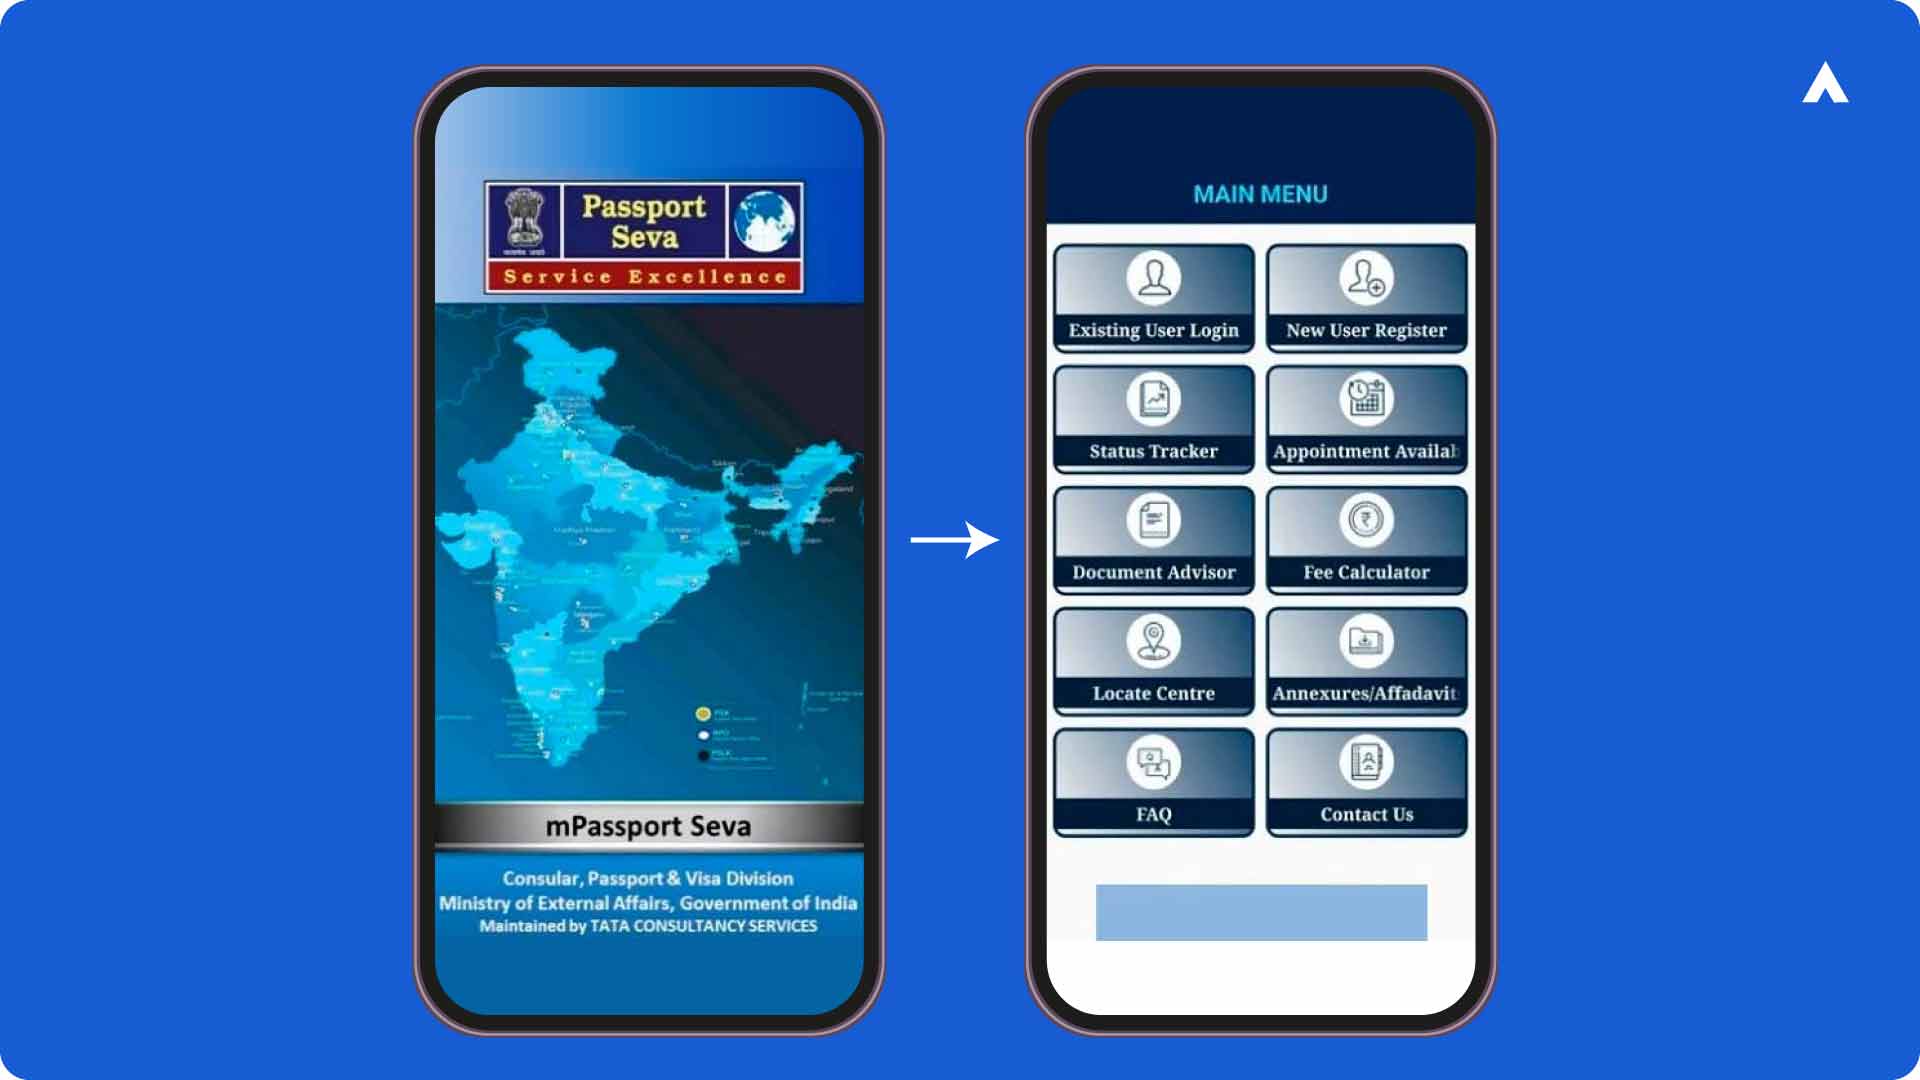 mPassport Seva App homepage